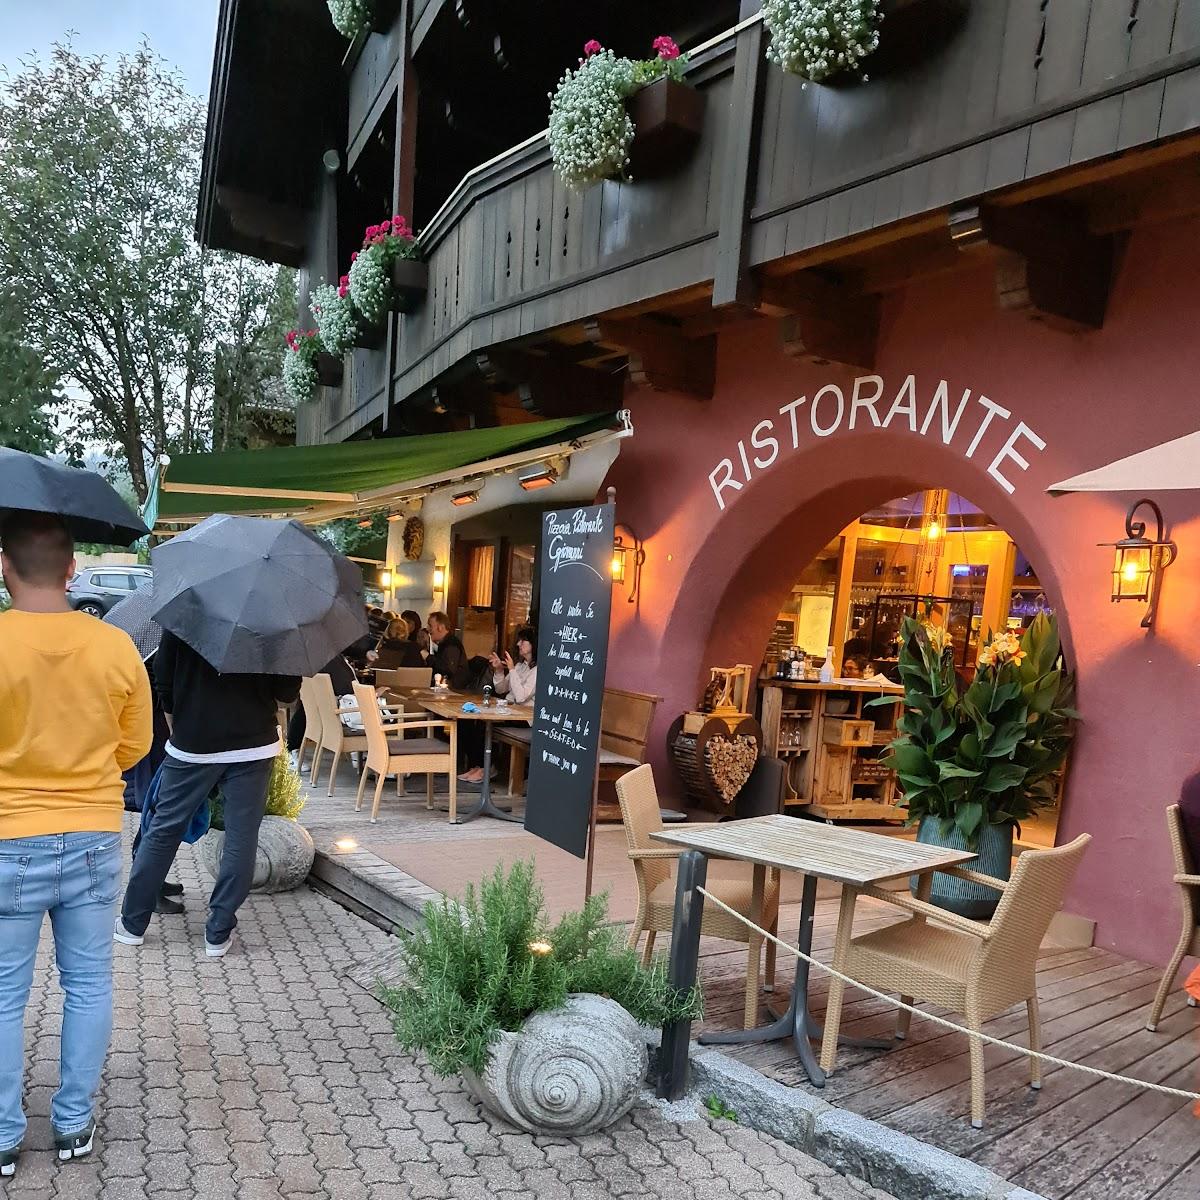 Restaurant "Ristorante Giovanni" in Söll